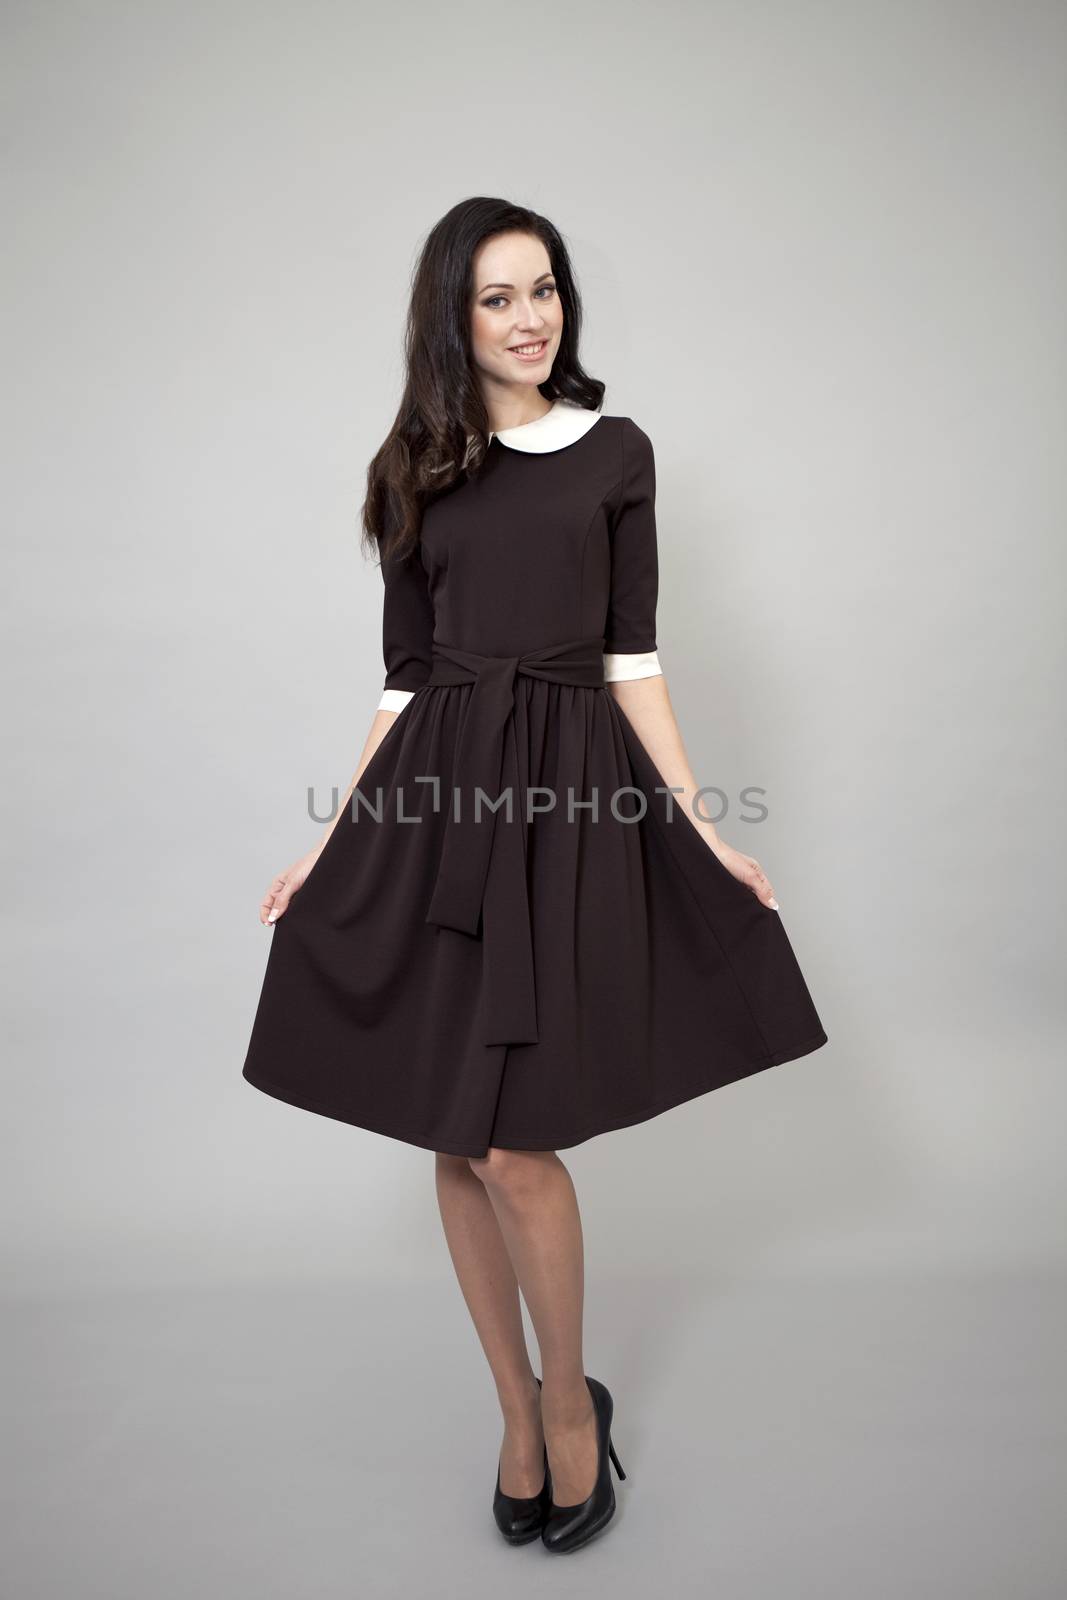 Beautiful professional model in dark brown dress by andersonrise